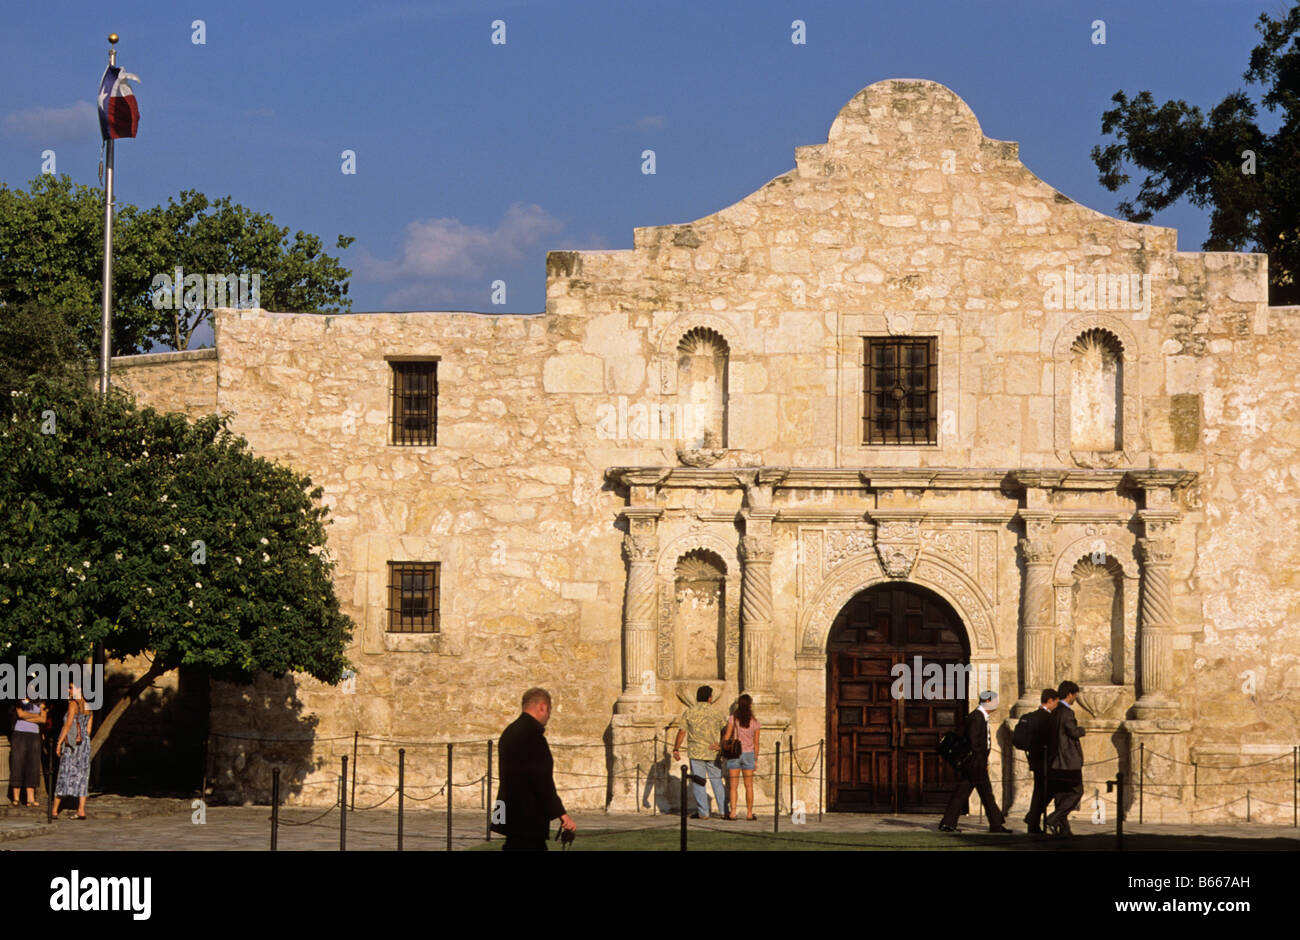 L'Alamo San Antonio Texas US Banque D'Images